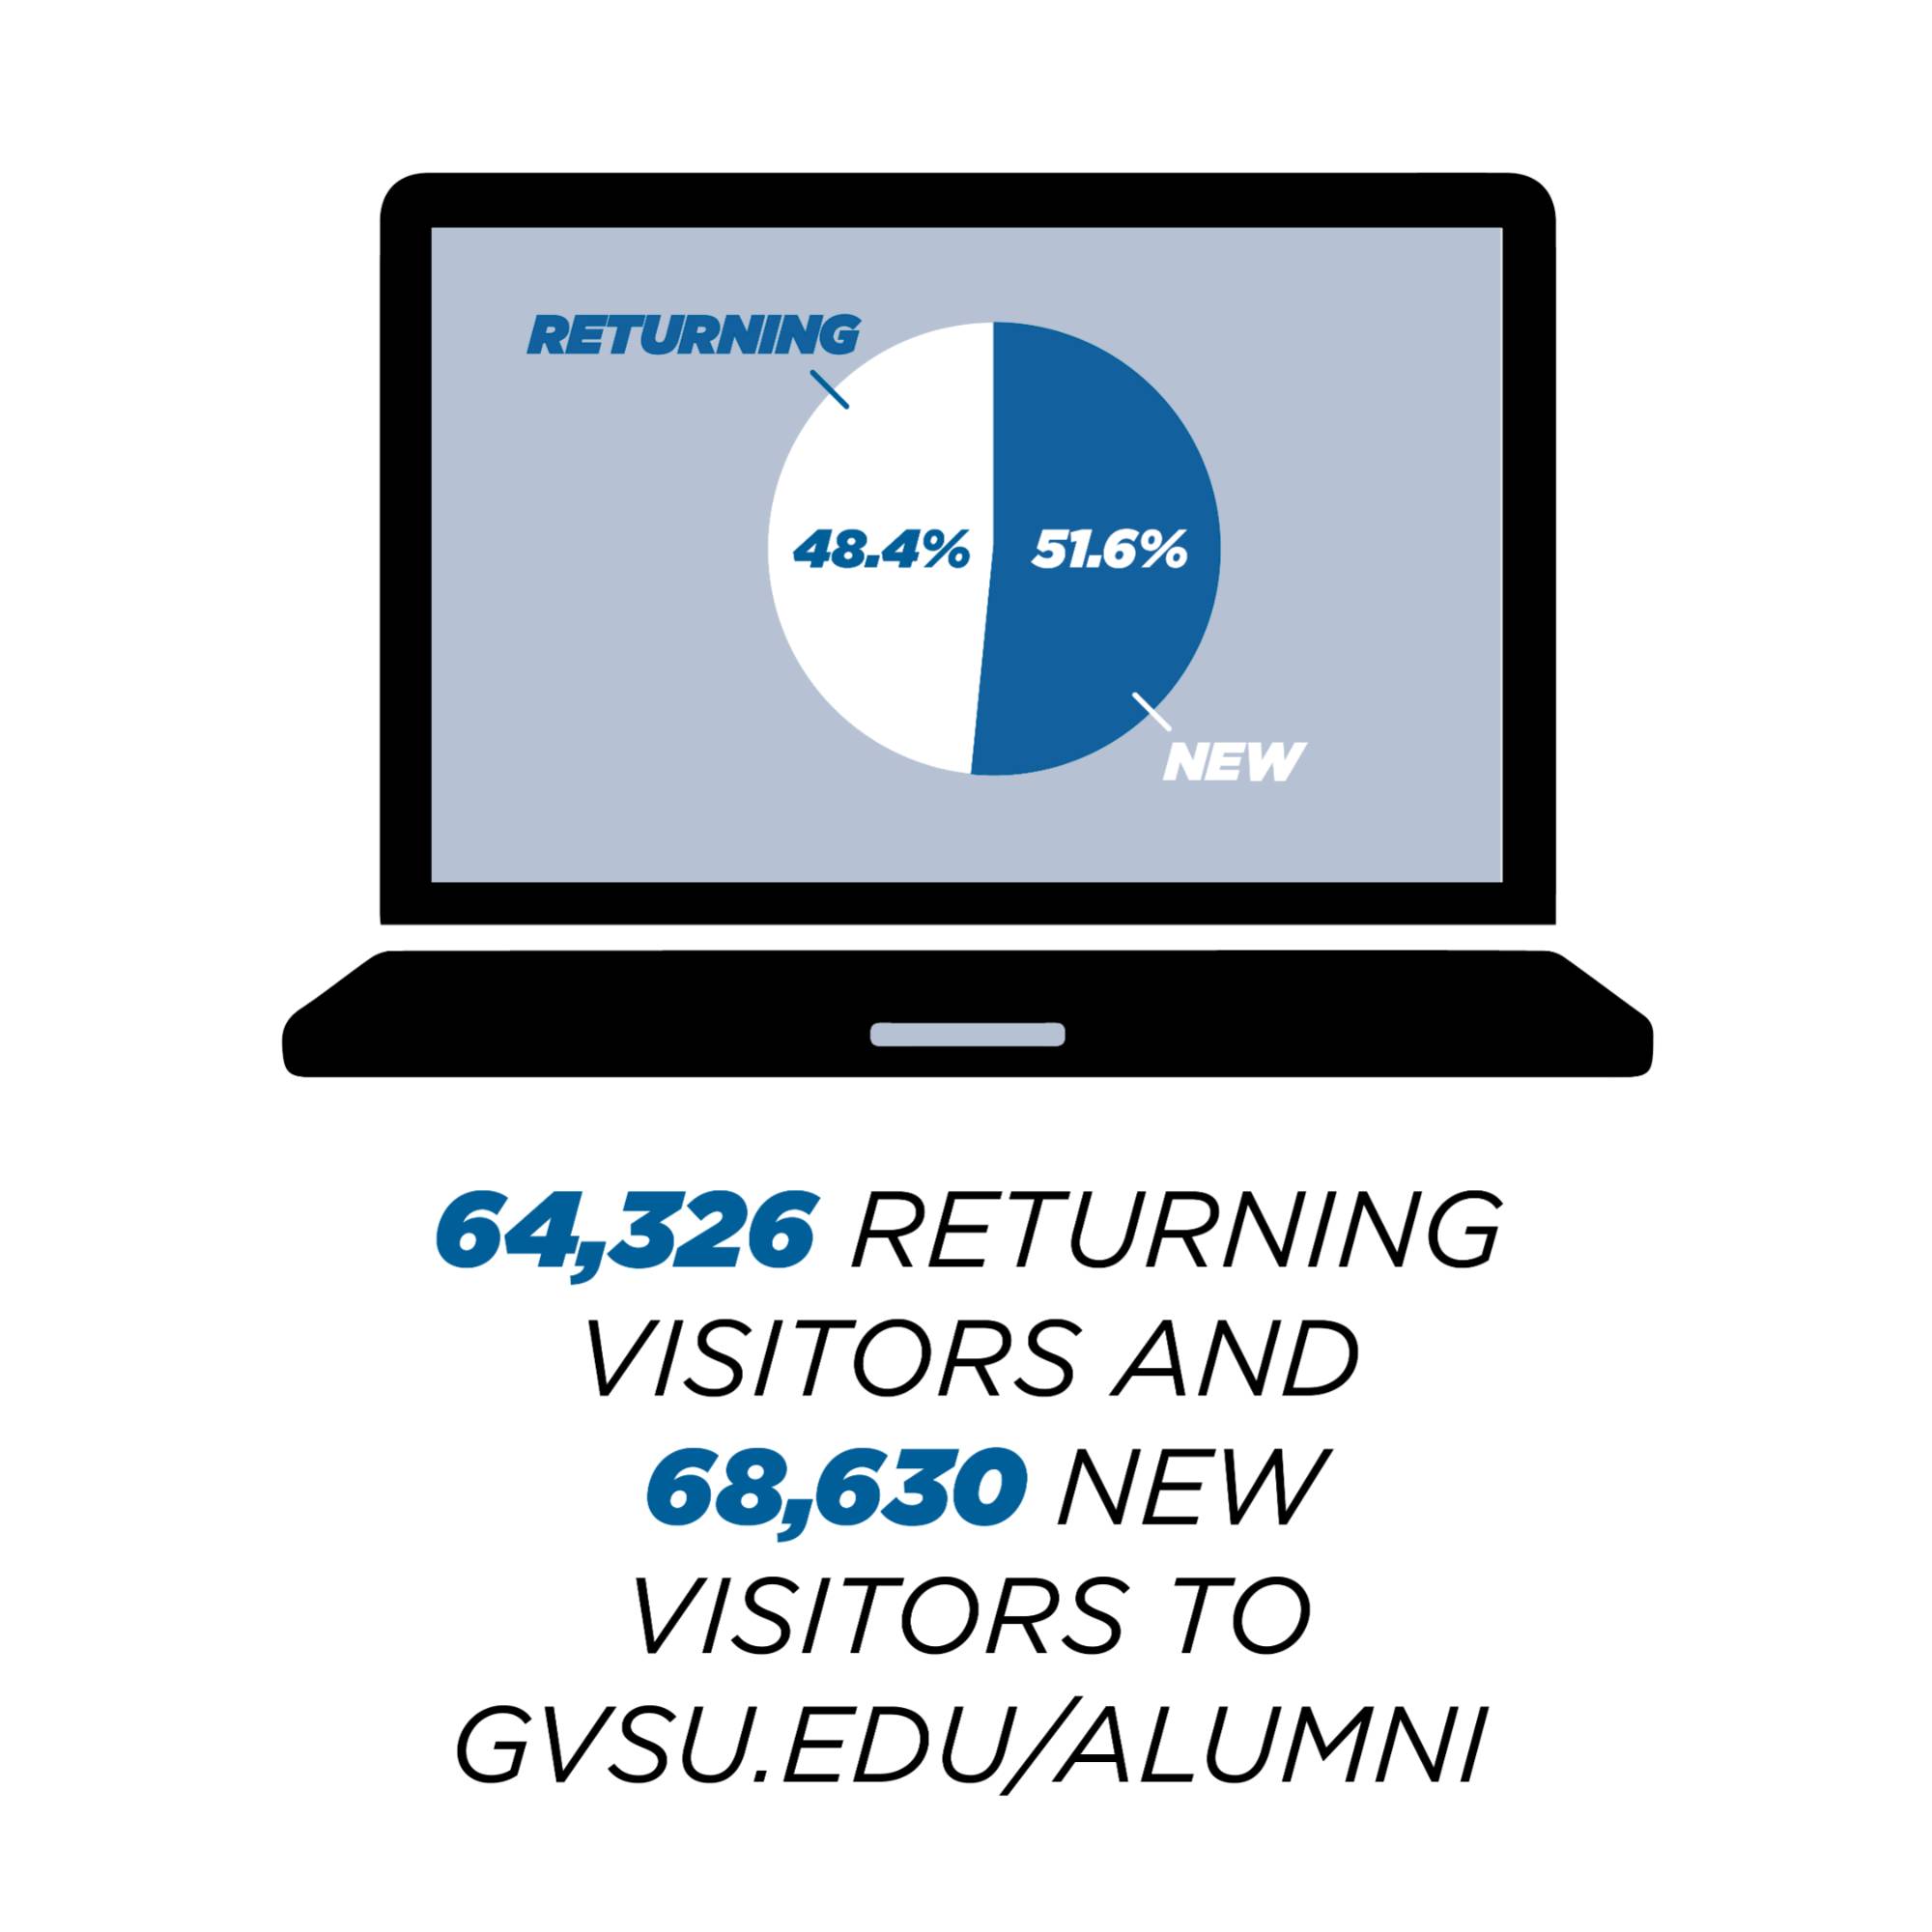 64,326 returning visitors and 68,630 new visitors to gvsu.edu/alumni